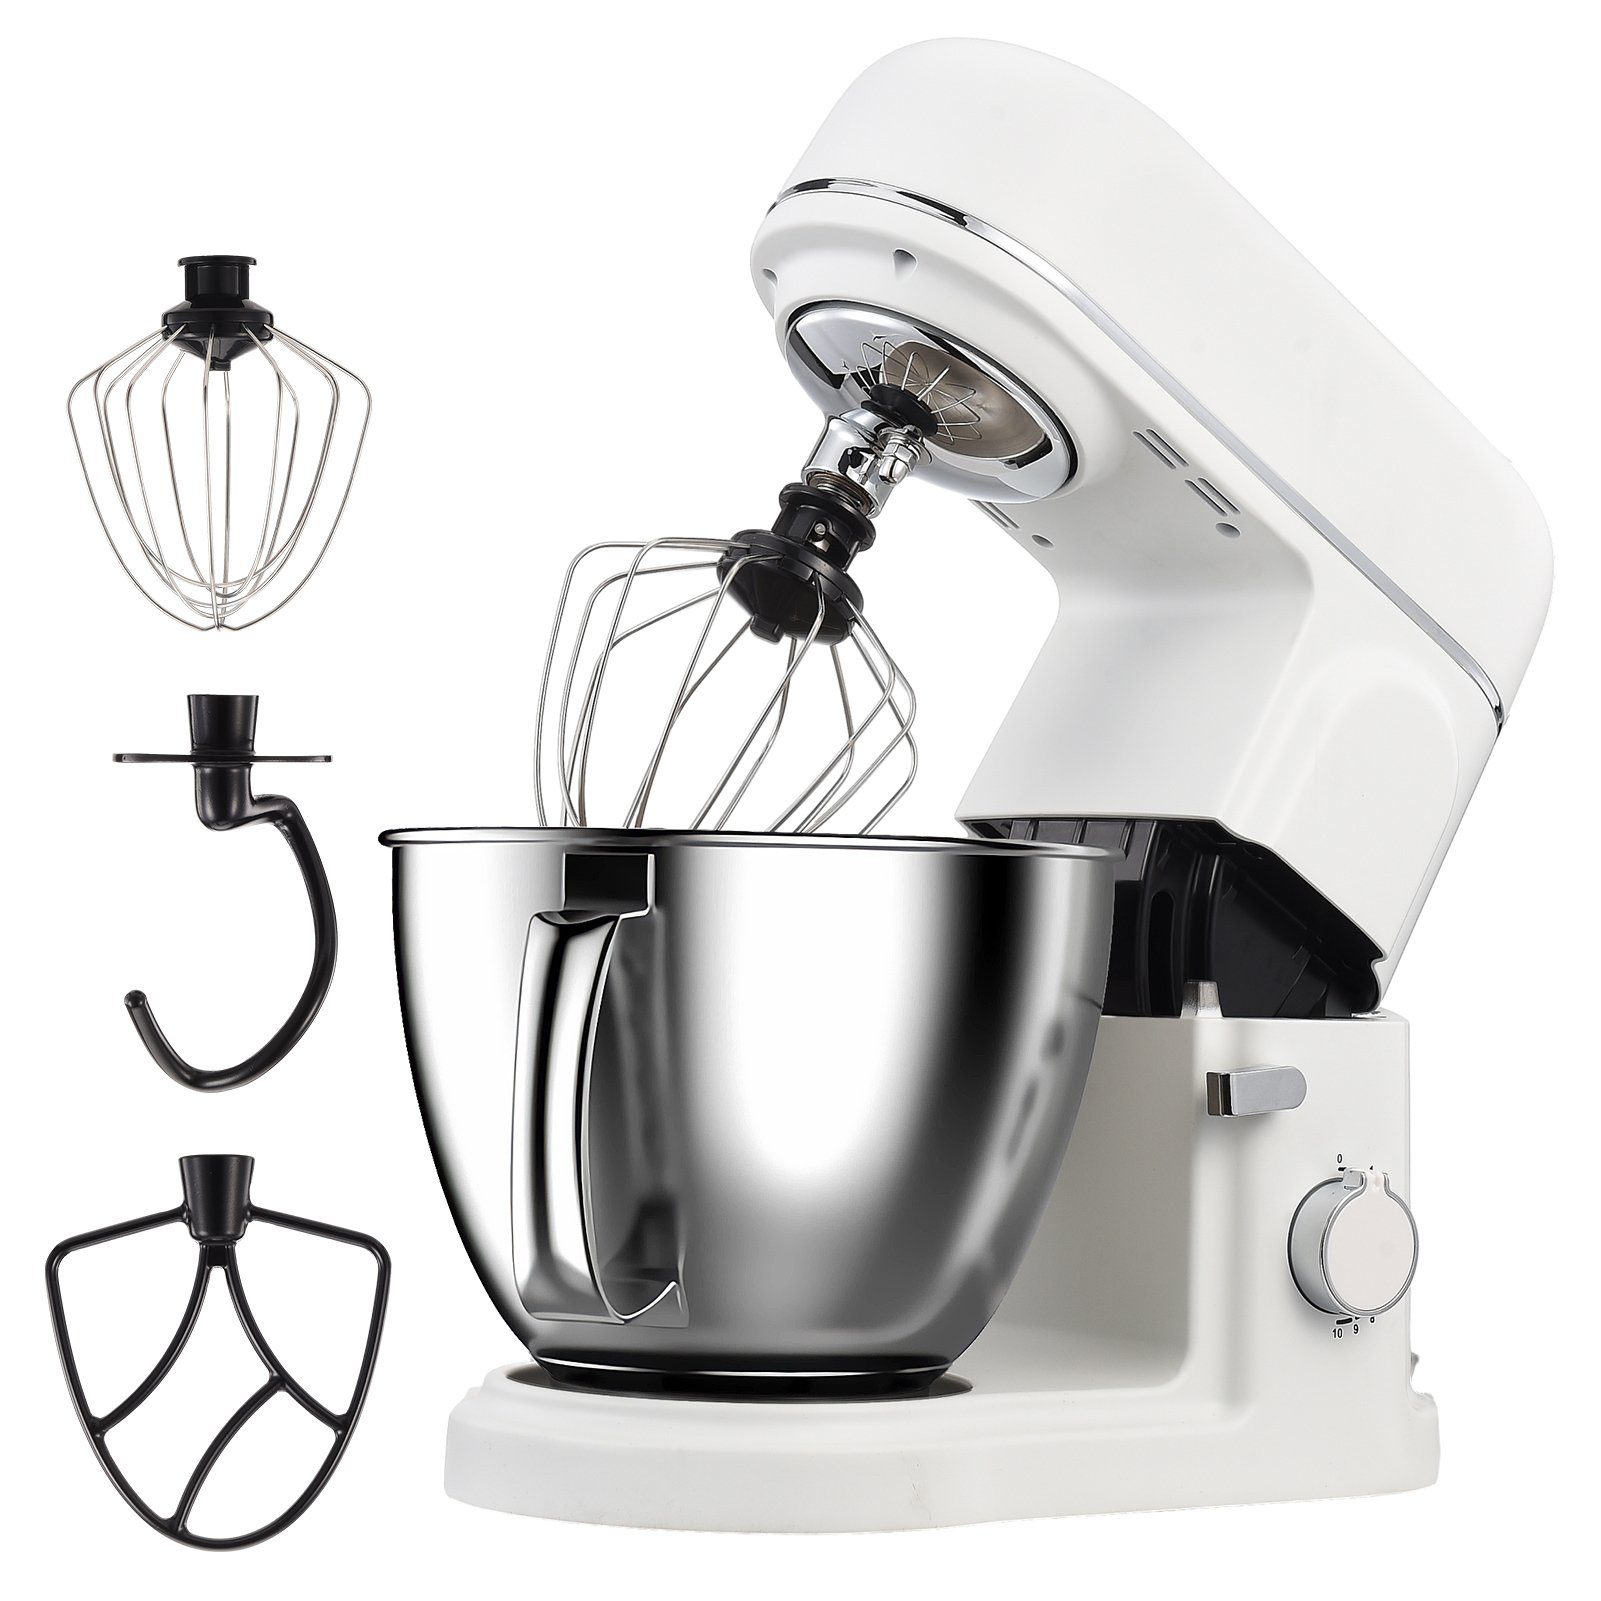 mit Multifunktional Haushaltsgeräte FUROKOY Mixer weiß Maschine Küchenmaschine Küchenmaschine Kleine Kochfunktion